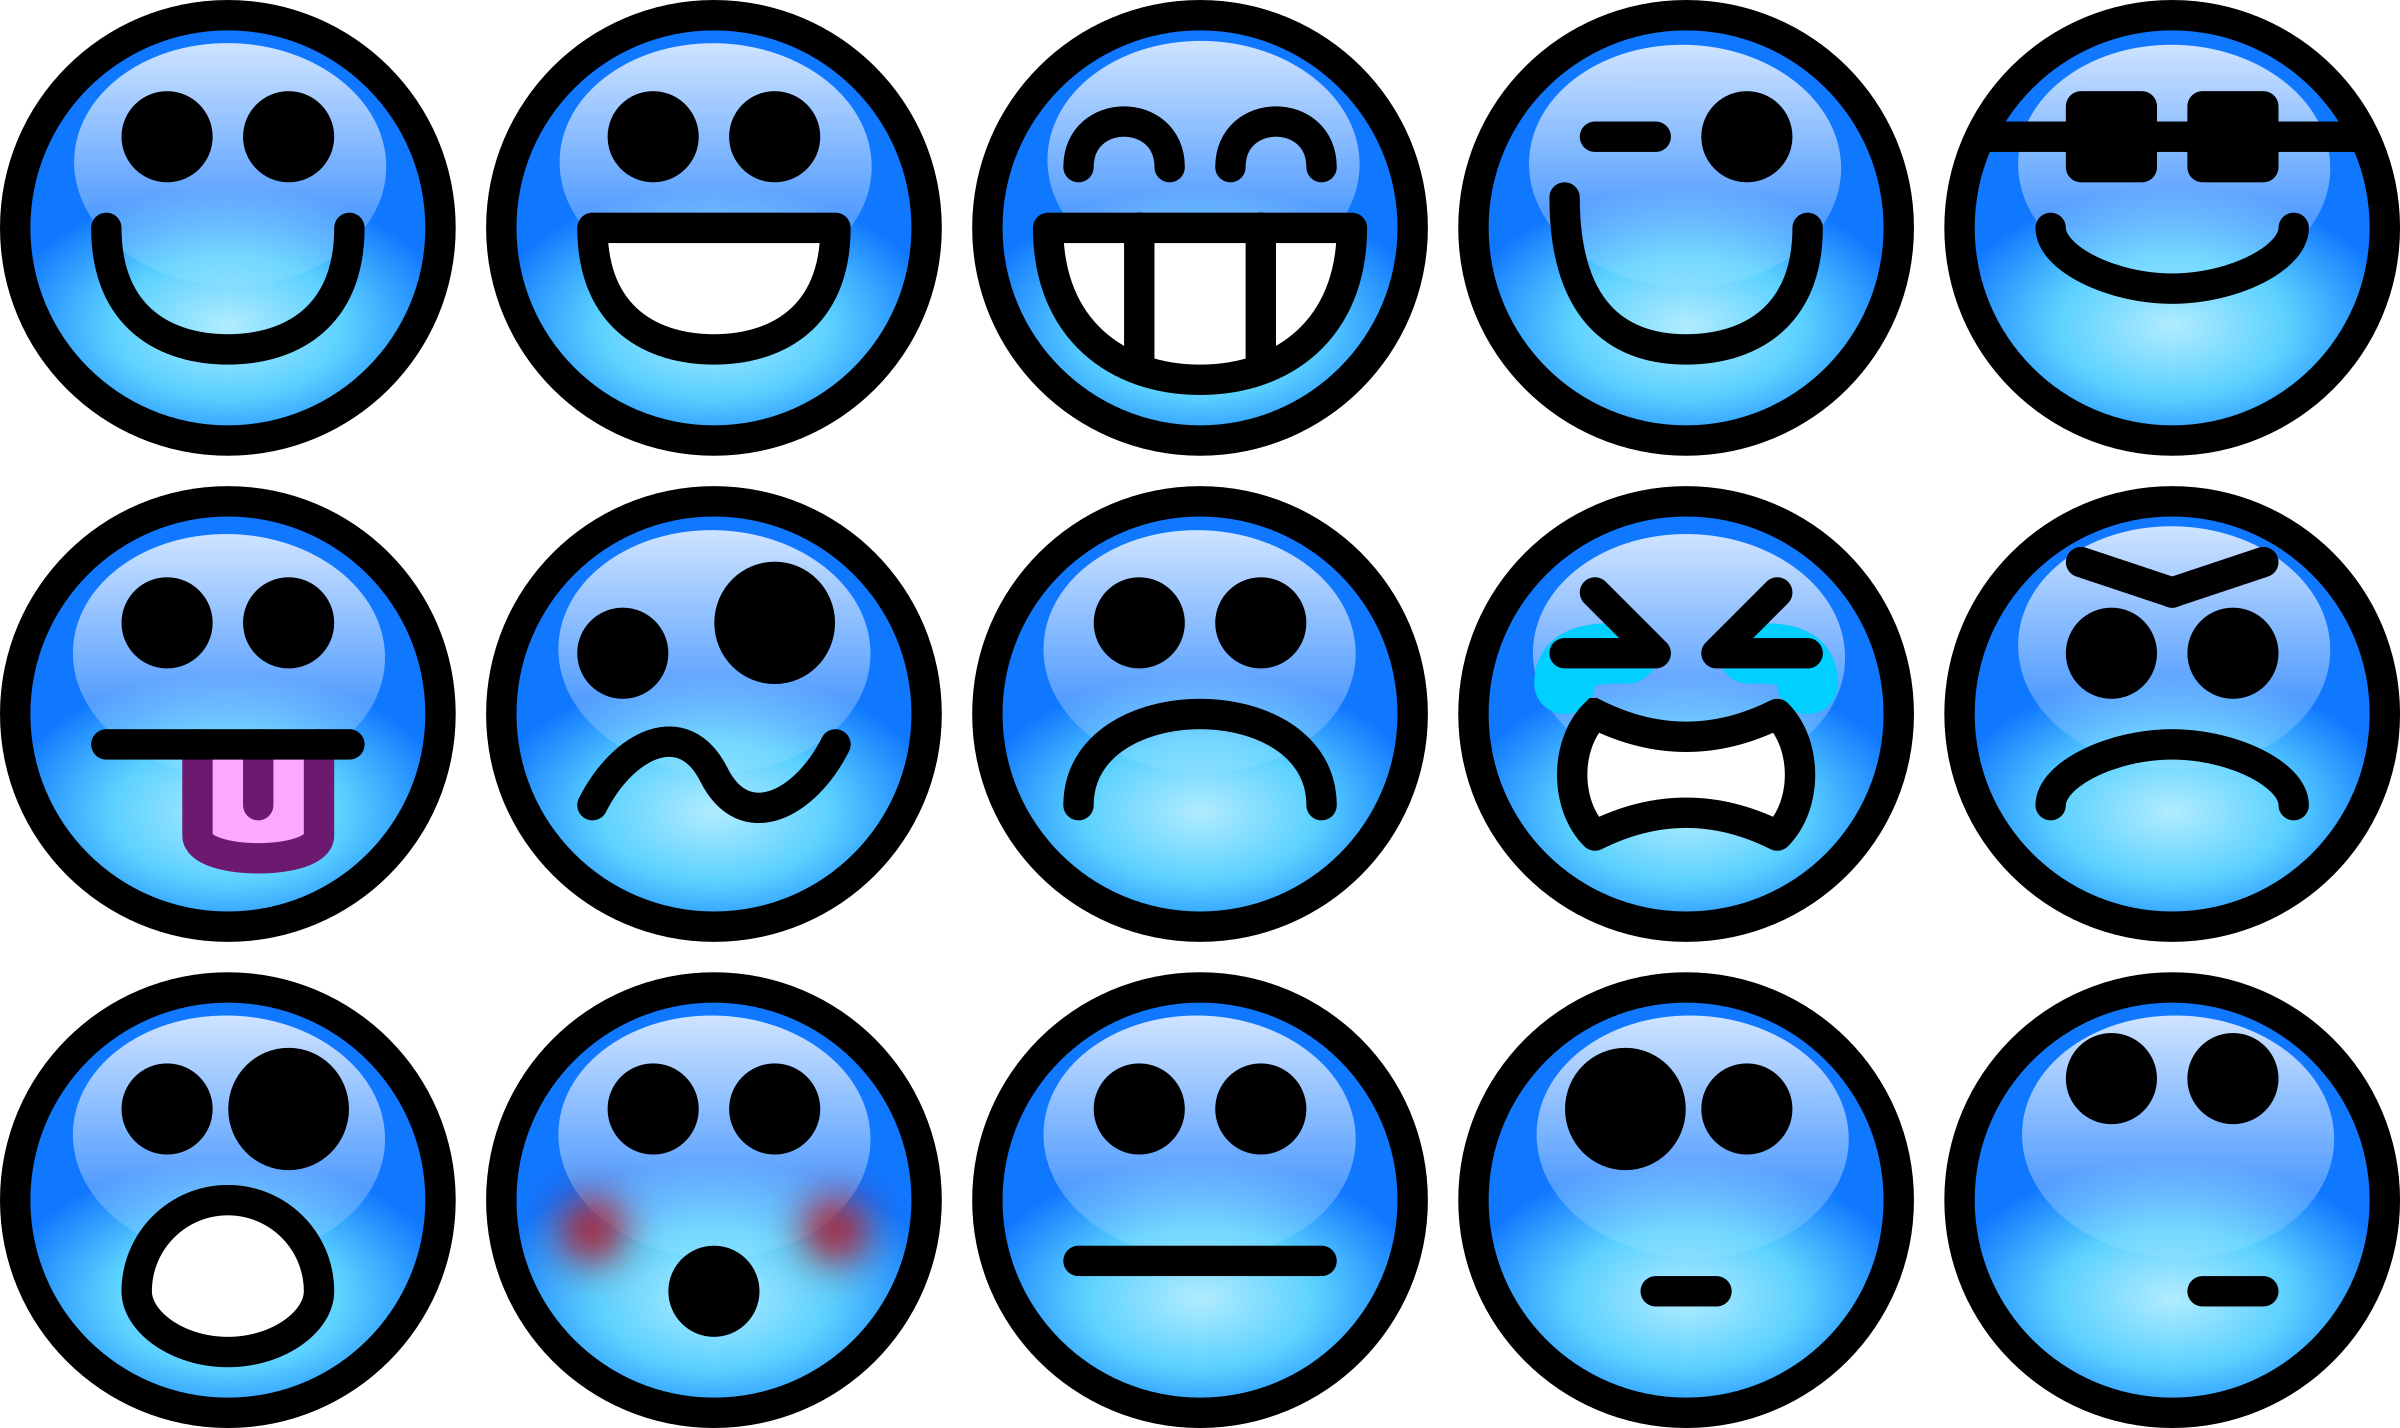 Big Image - Blue Smiley Faces (2400x1428)